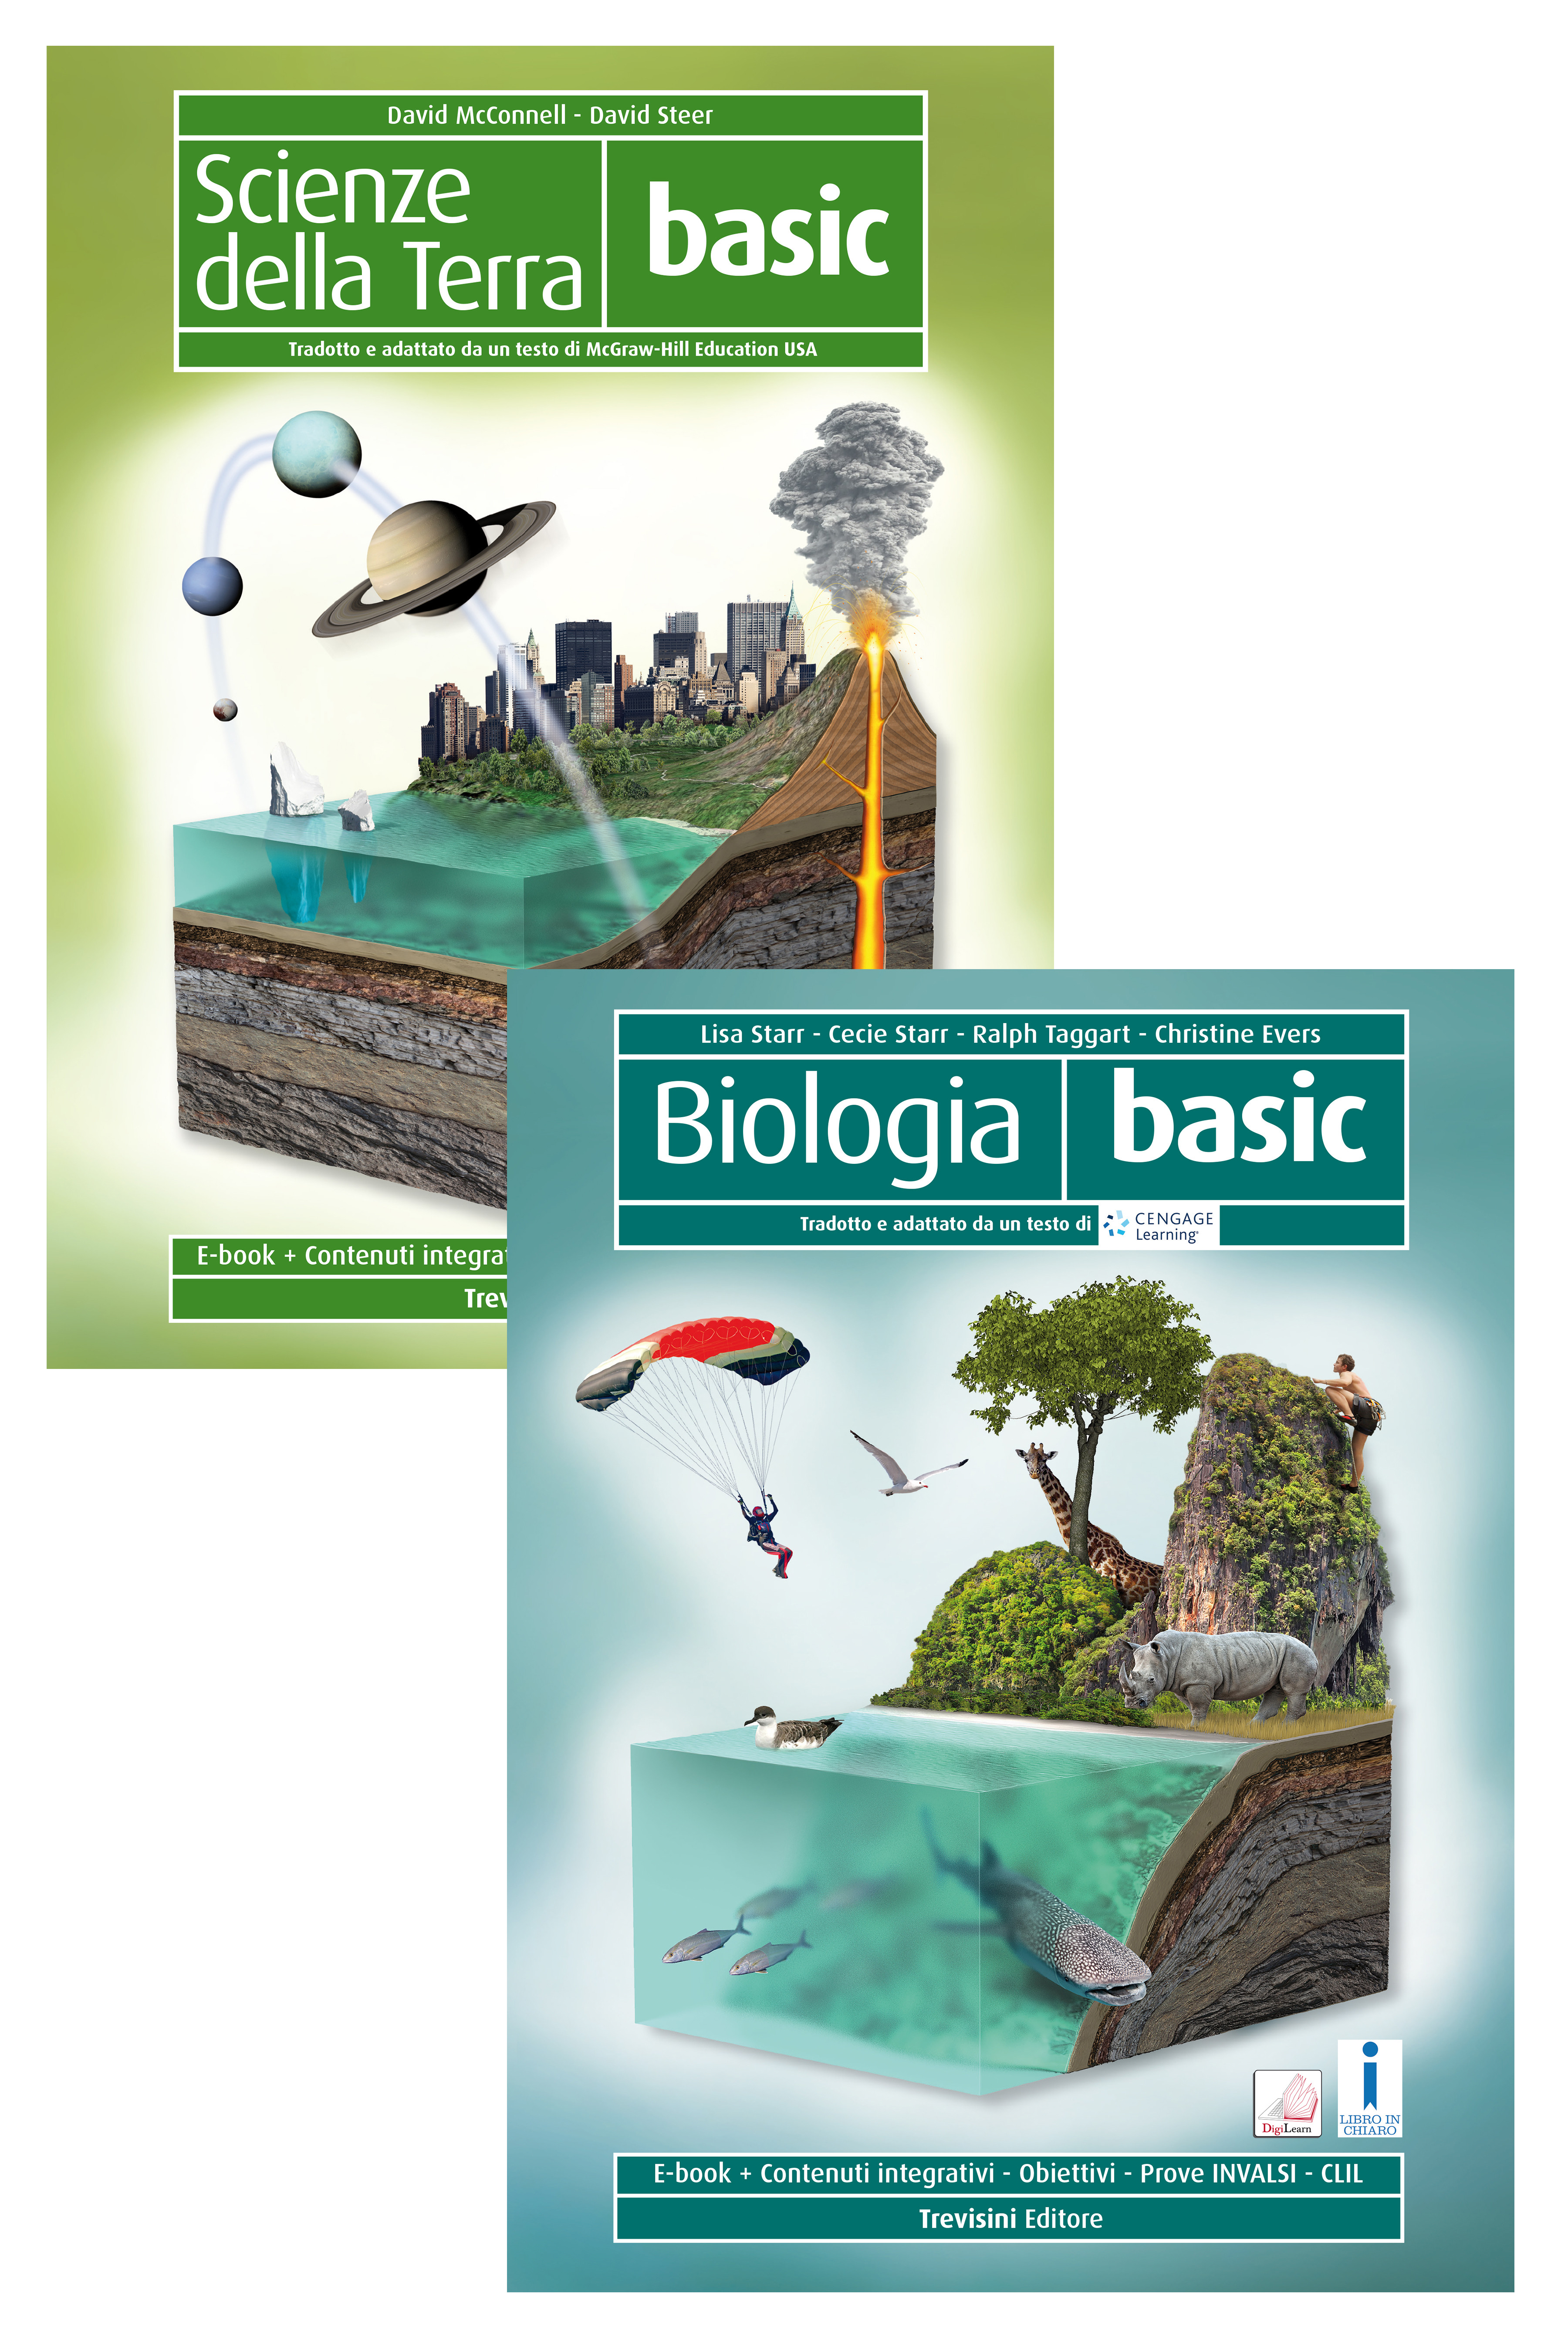 Scienze della terra basic + biologia basic 